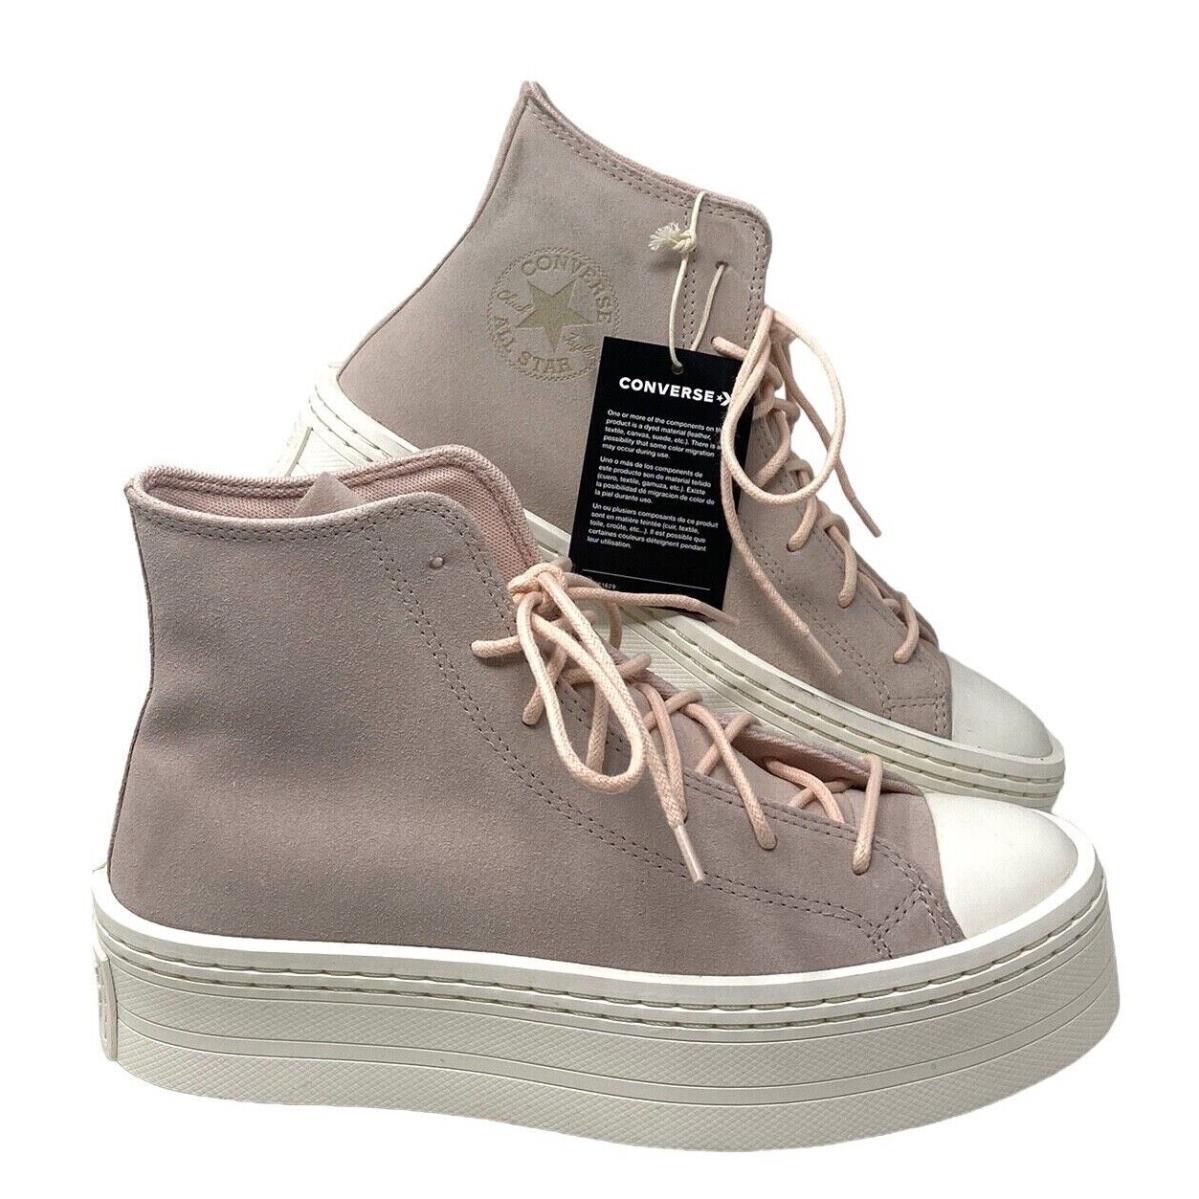 Converse Chuck Taylor Modern Lift Platform Shoes Suede Pink Casual Women A04663C